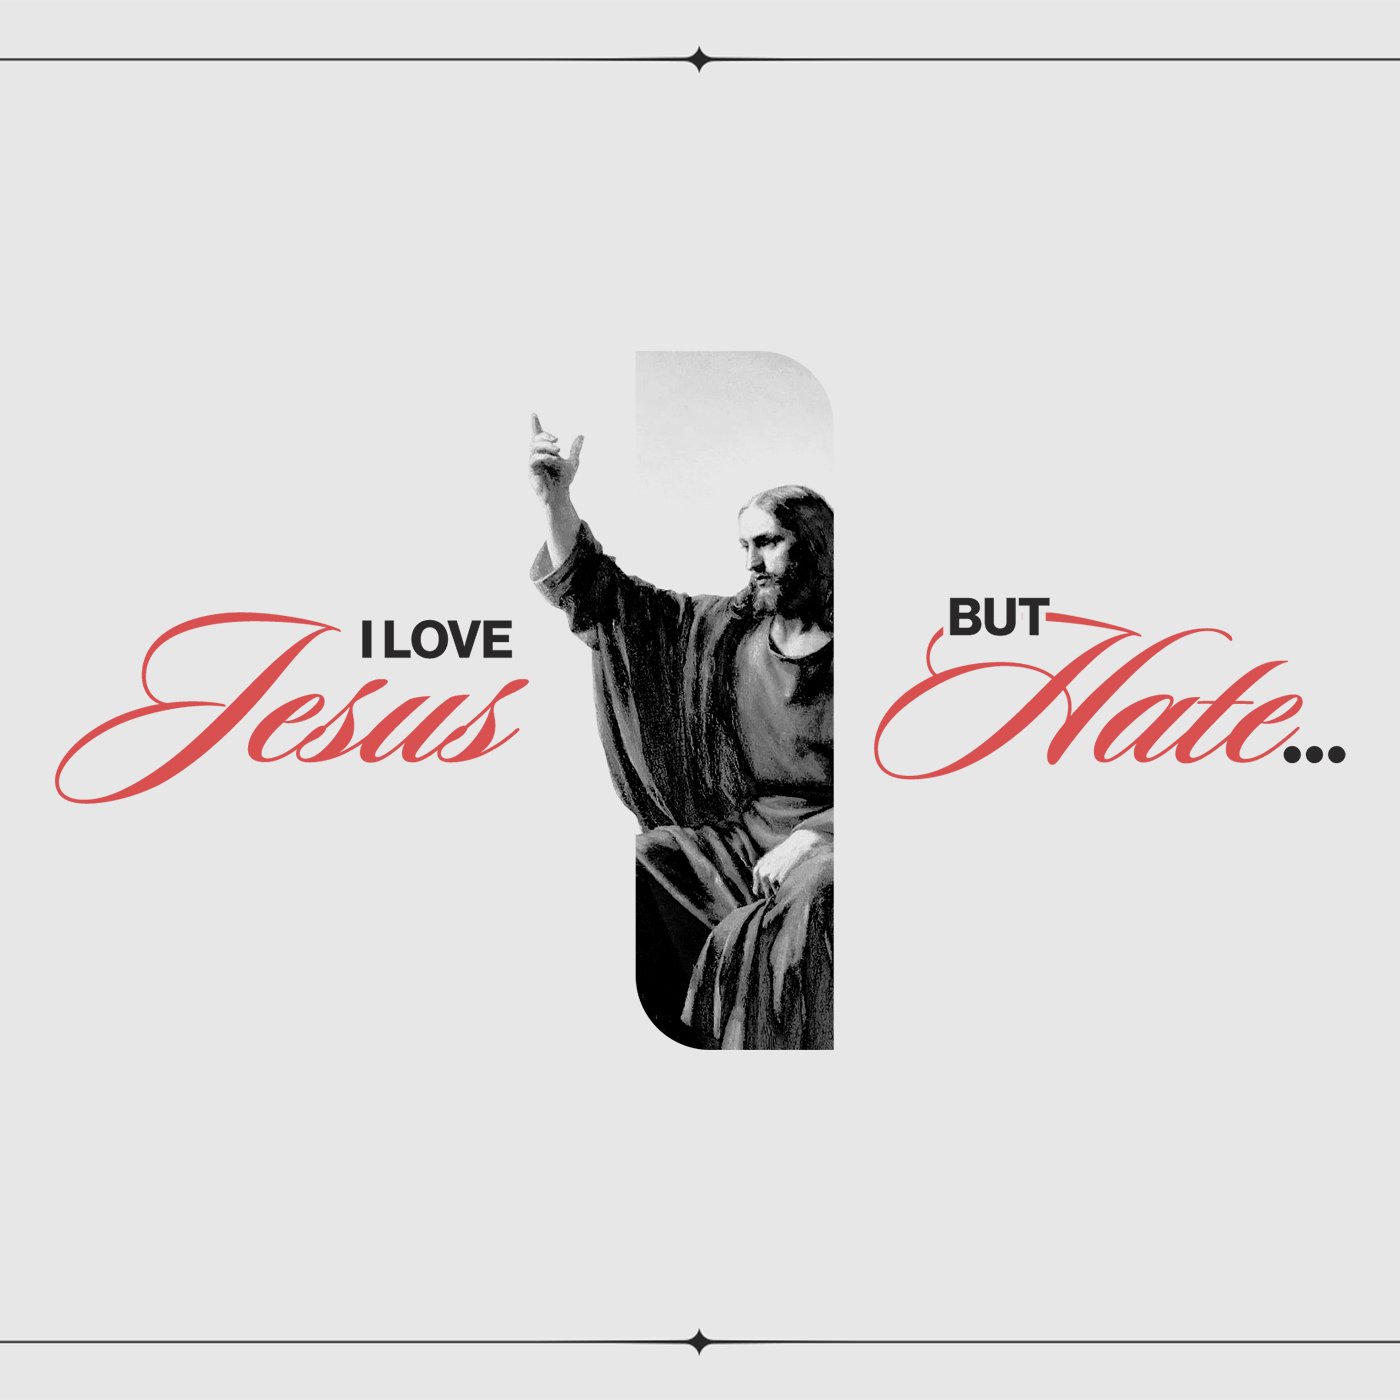 I Love Jesus But Hate Square Image.jpg